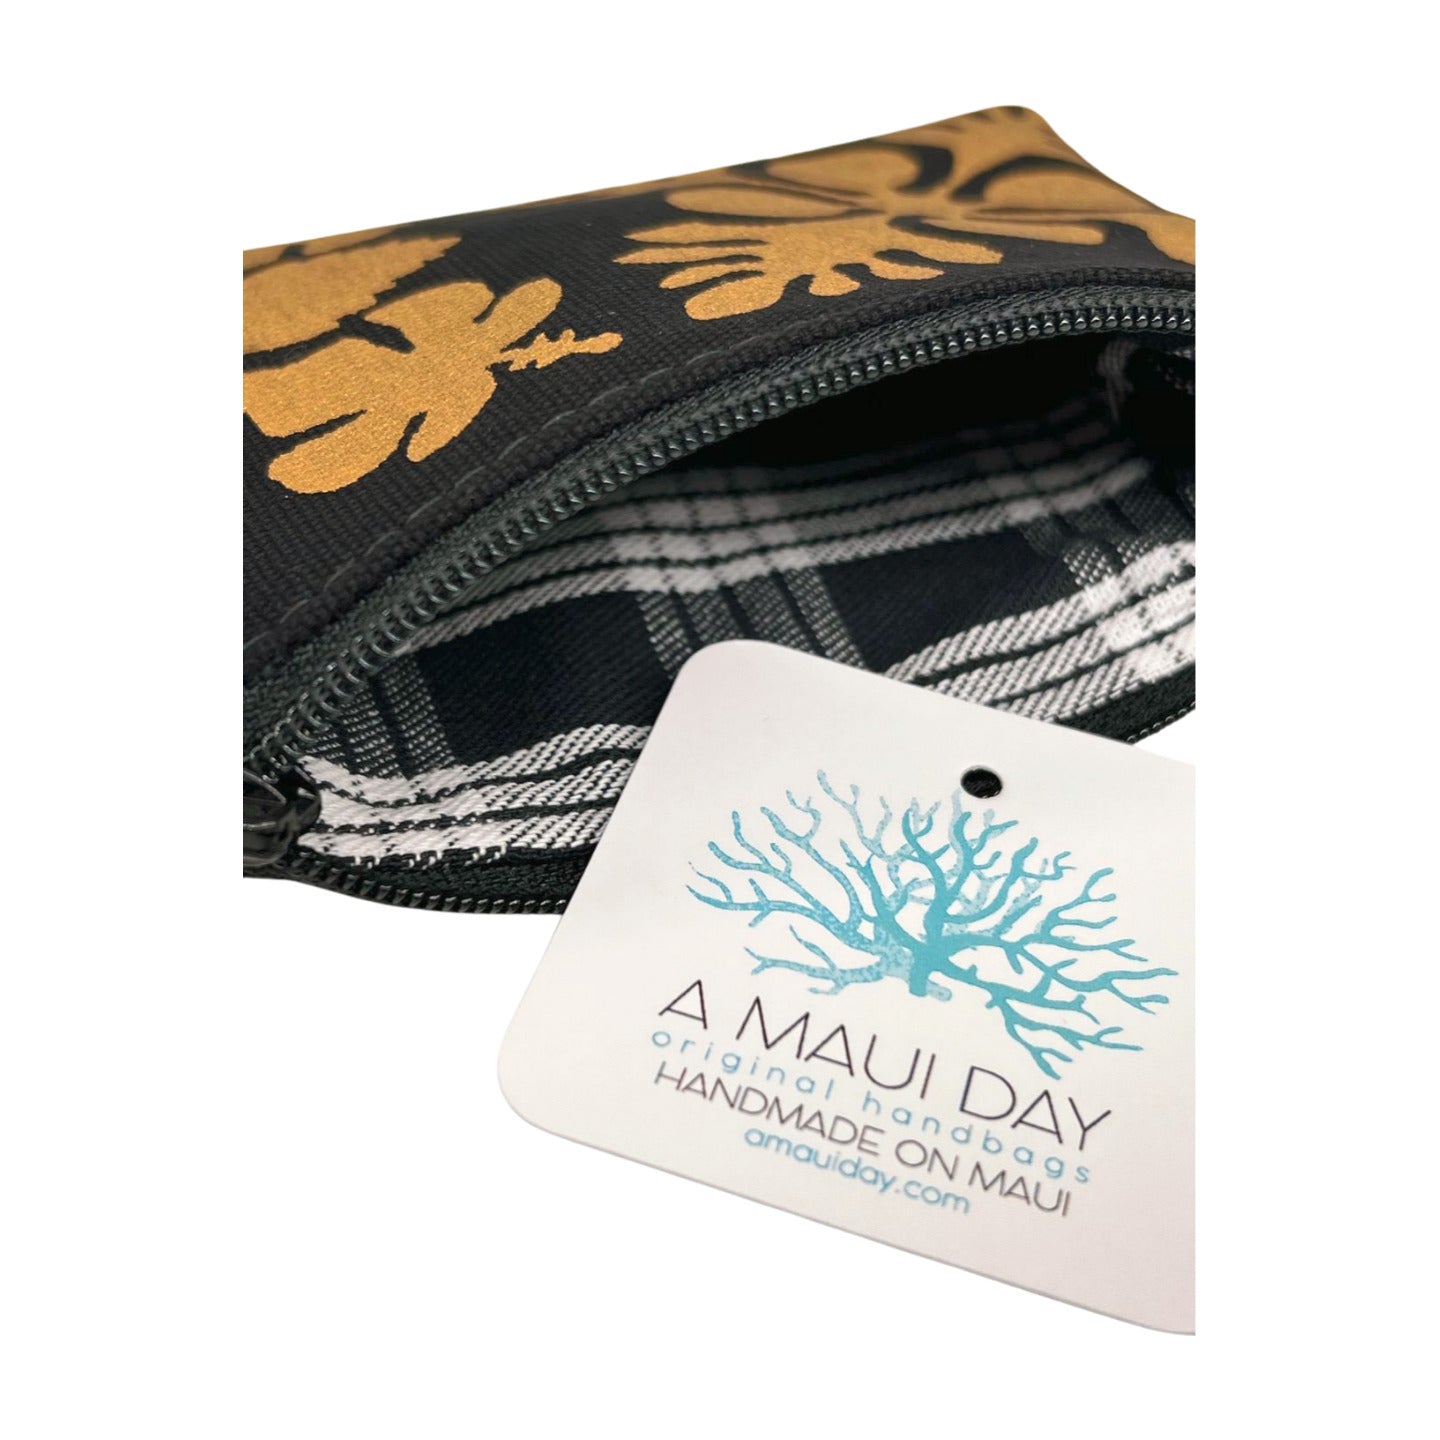 Pop-Up Mākeke - A Maui Day Original Handbags - Handprinted Mini Handbag - Gold Quilt on Black Canvas - Inside